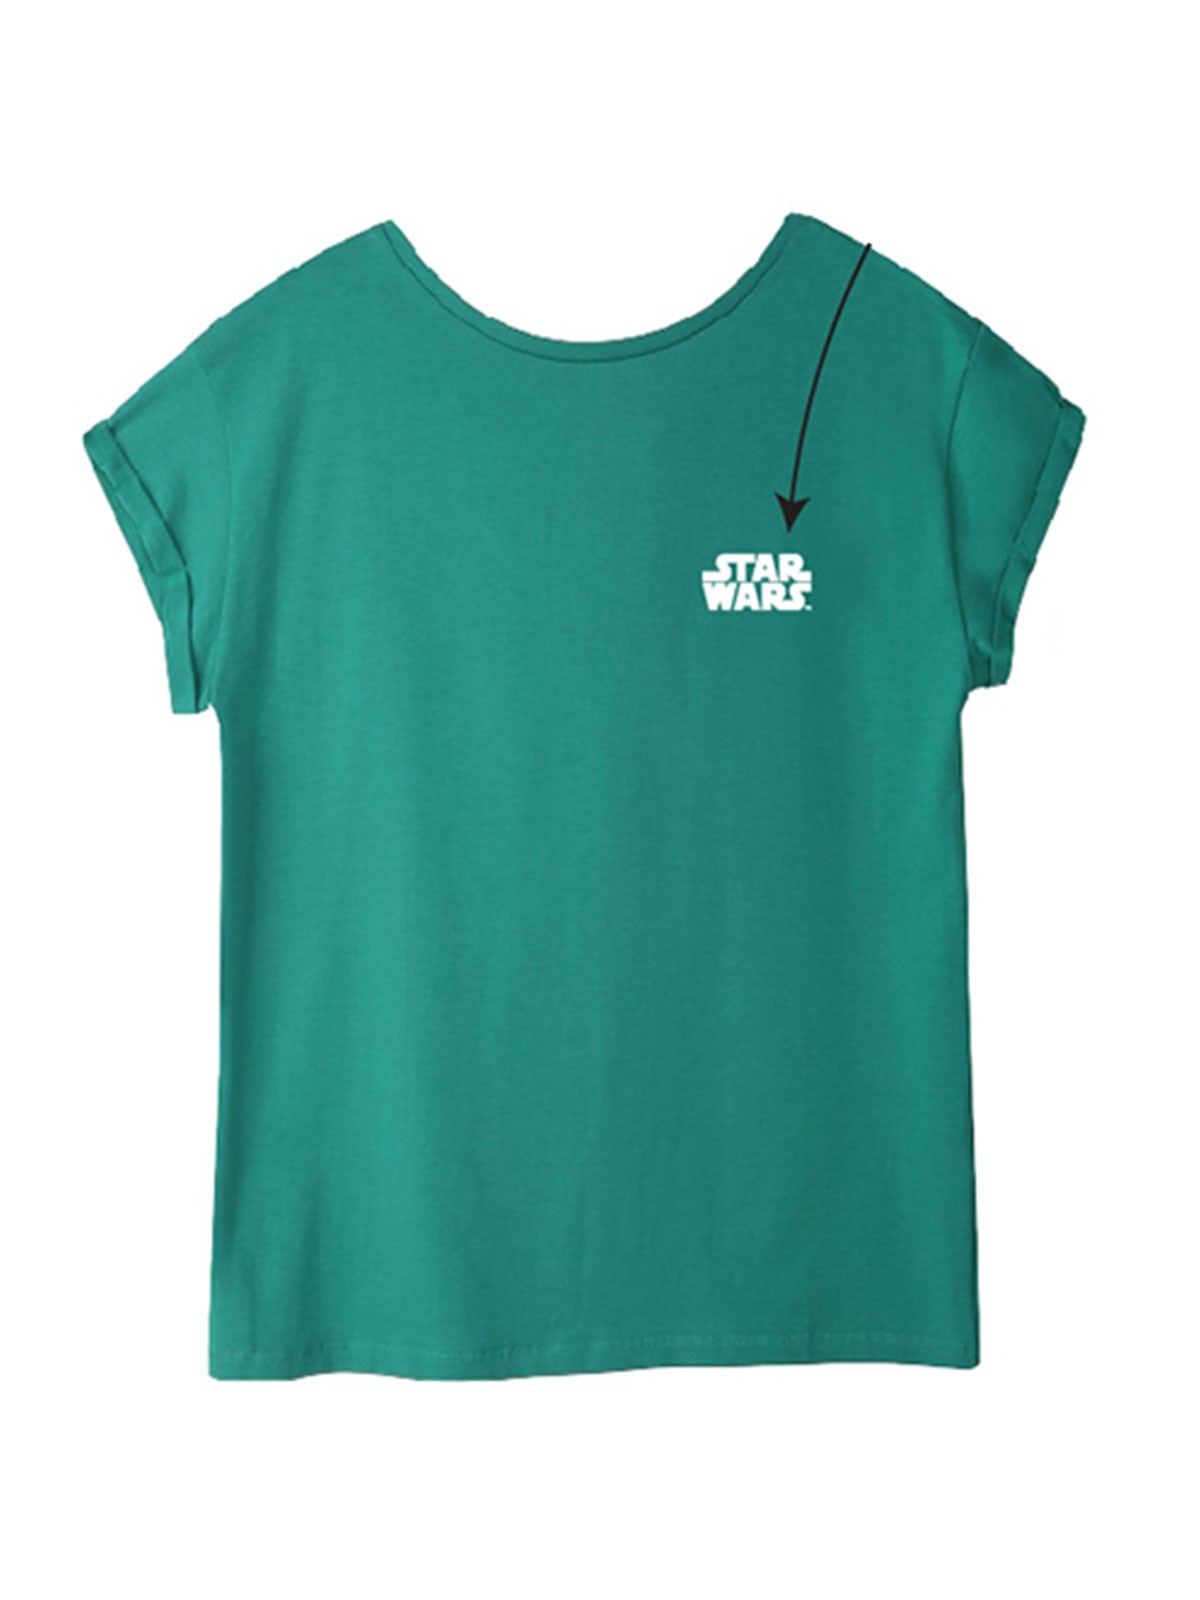 Star Wars T-shirt short sleeves